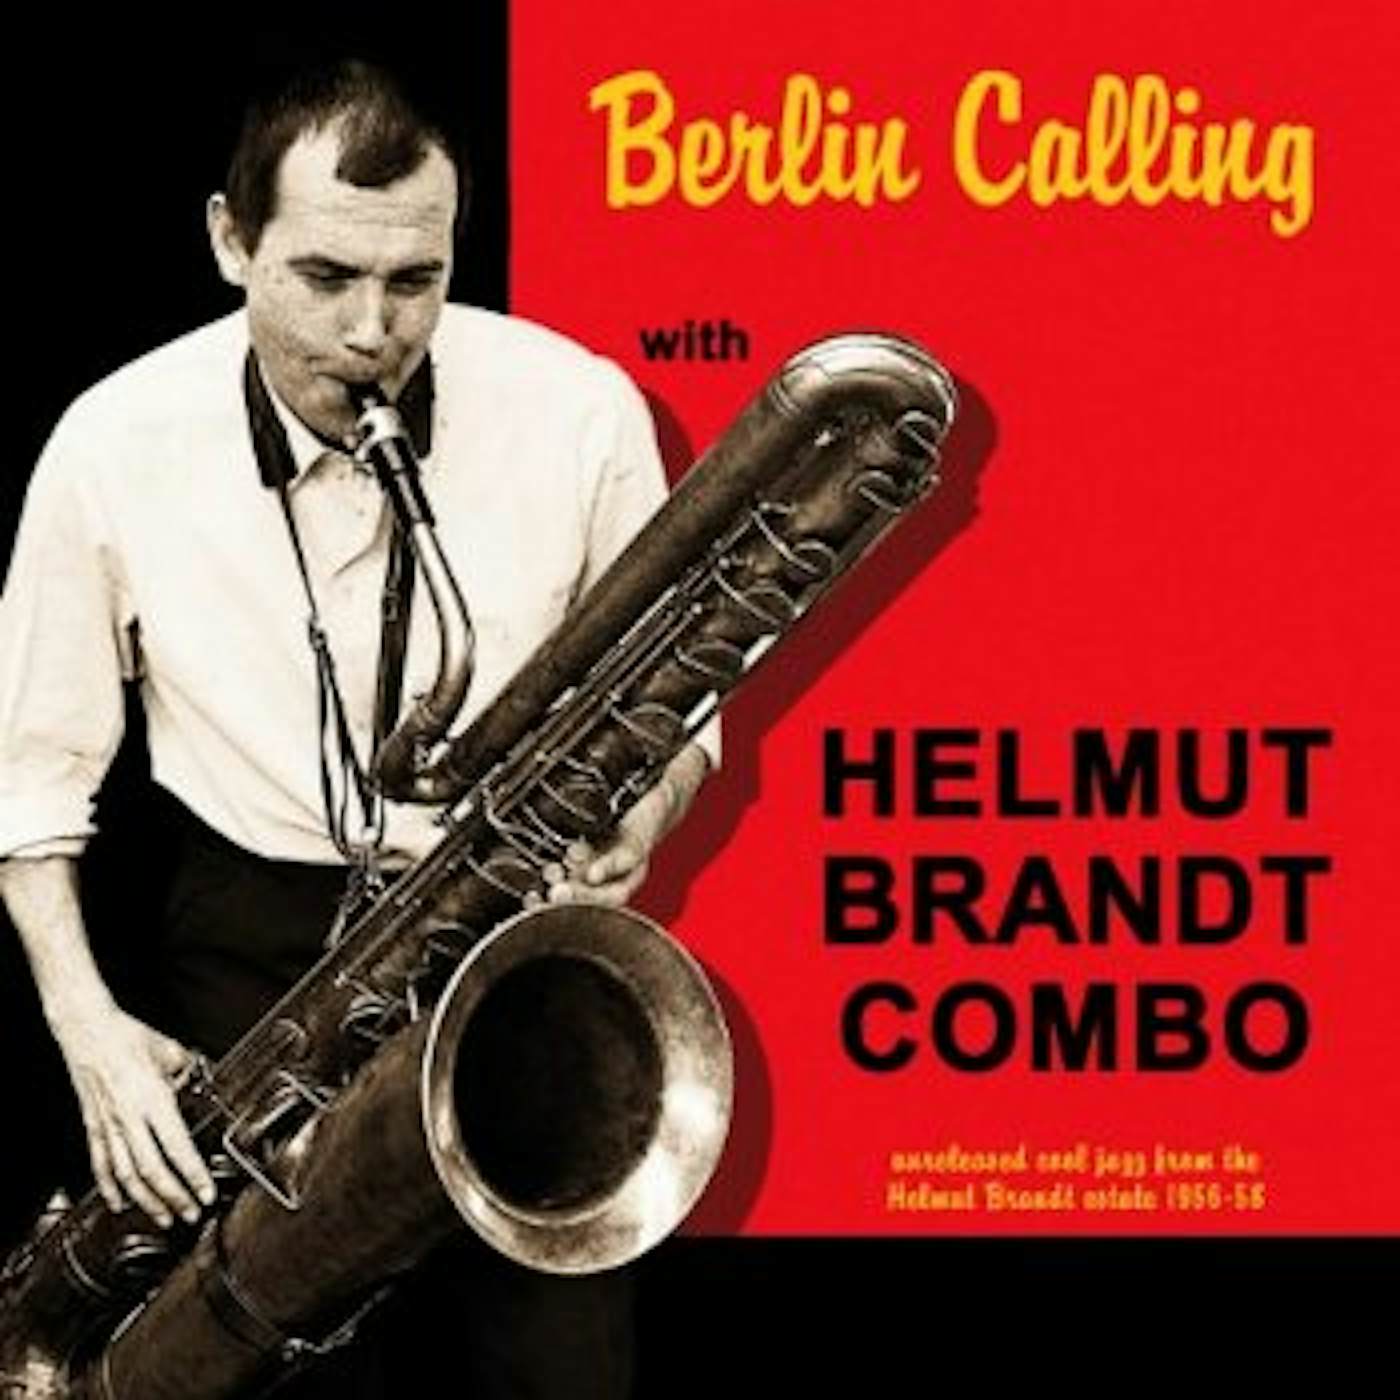 Helmut Brandt Combo BERLIN CALLING CD